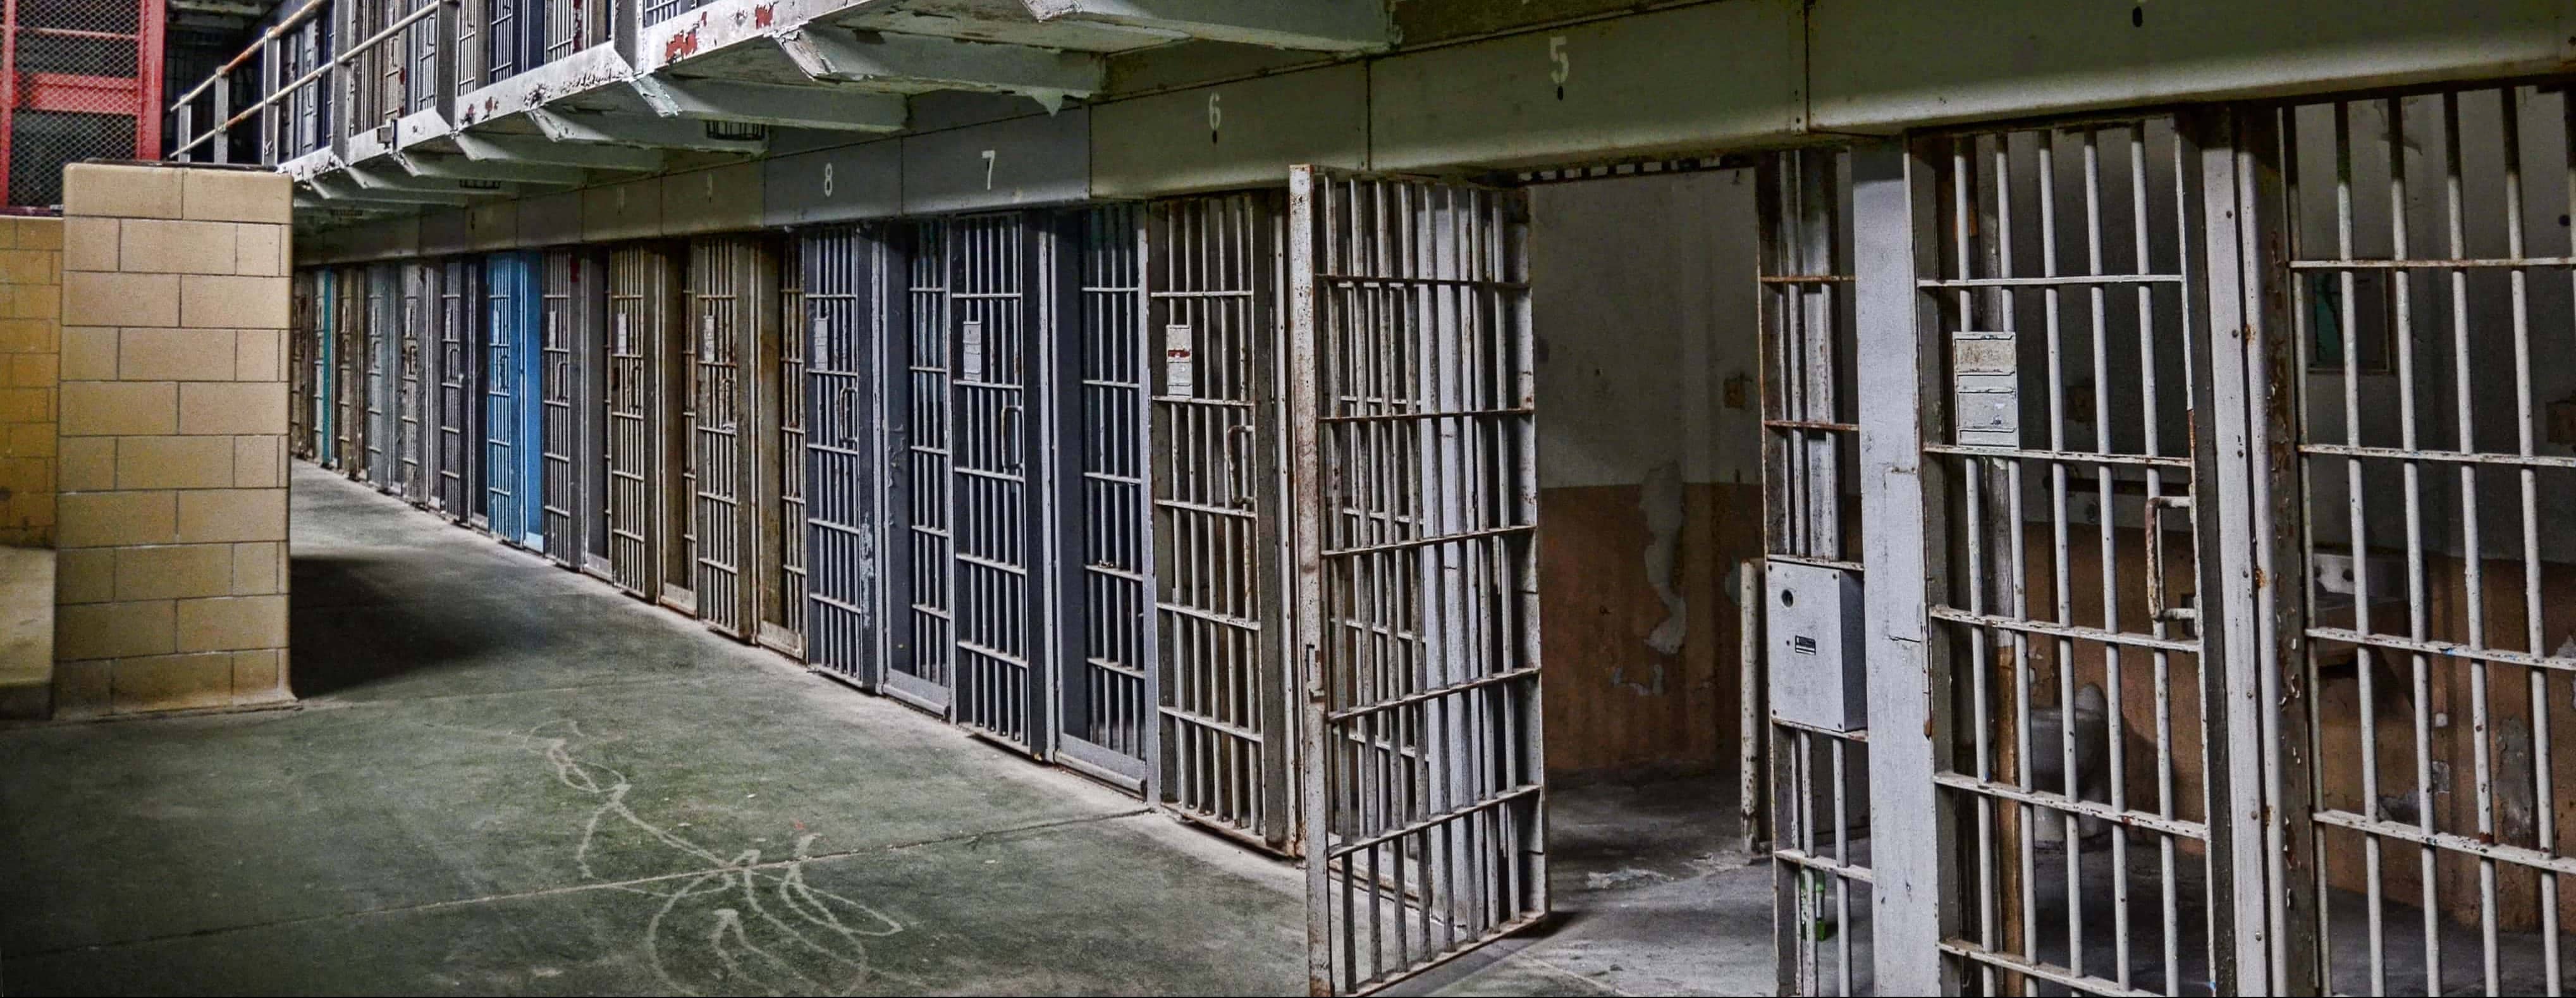 prison-jpg-15